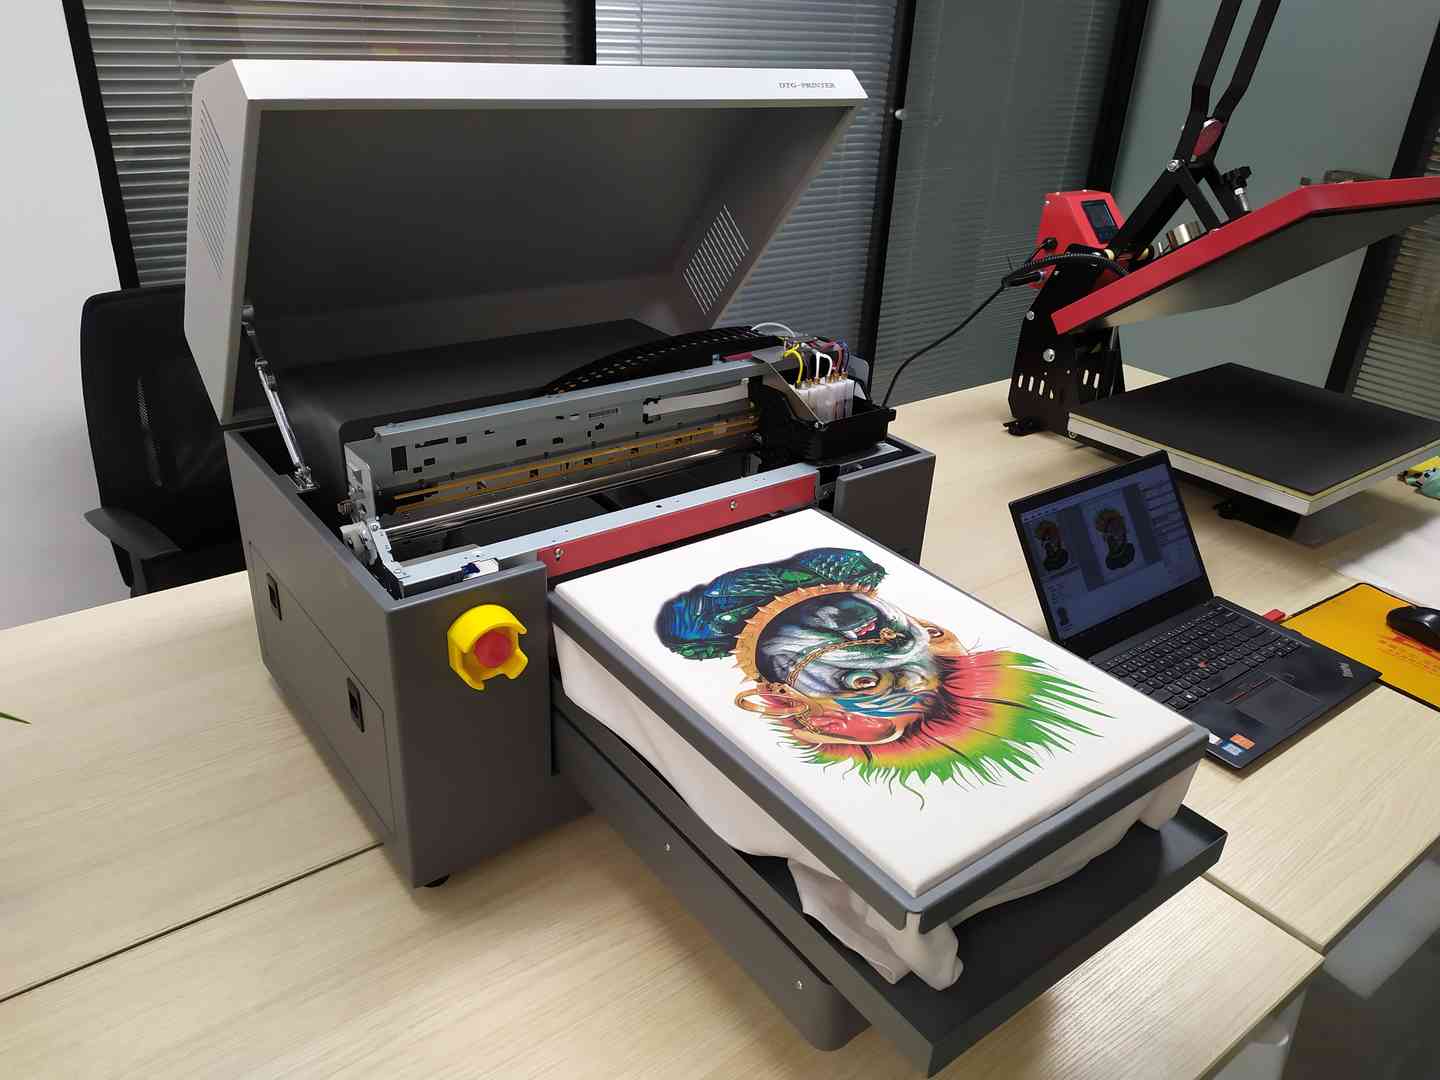 Hot Selling DTG printer digital textile printer A3 Print size for T-shirt Printing